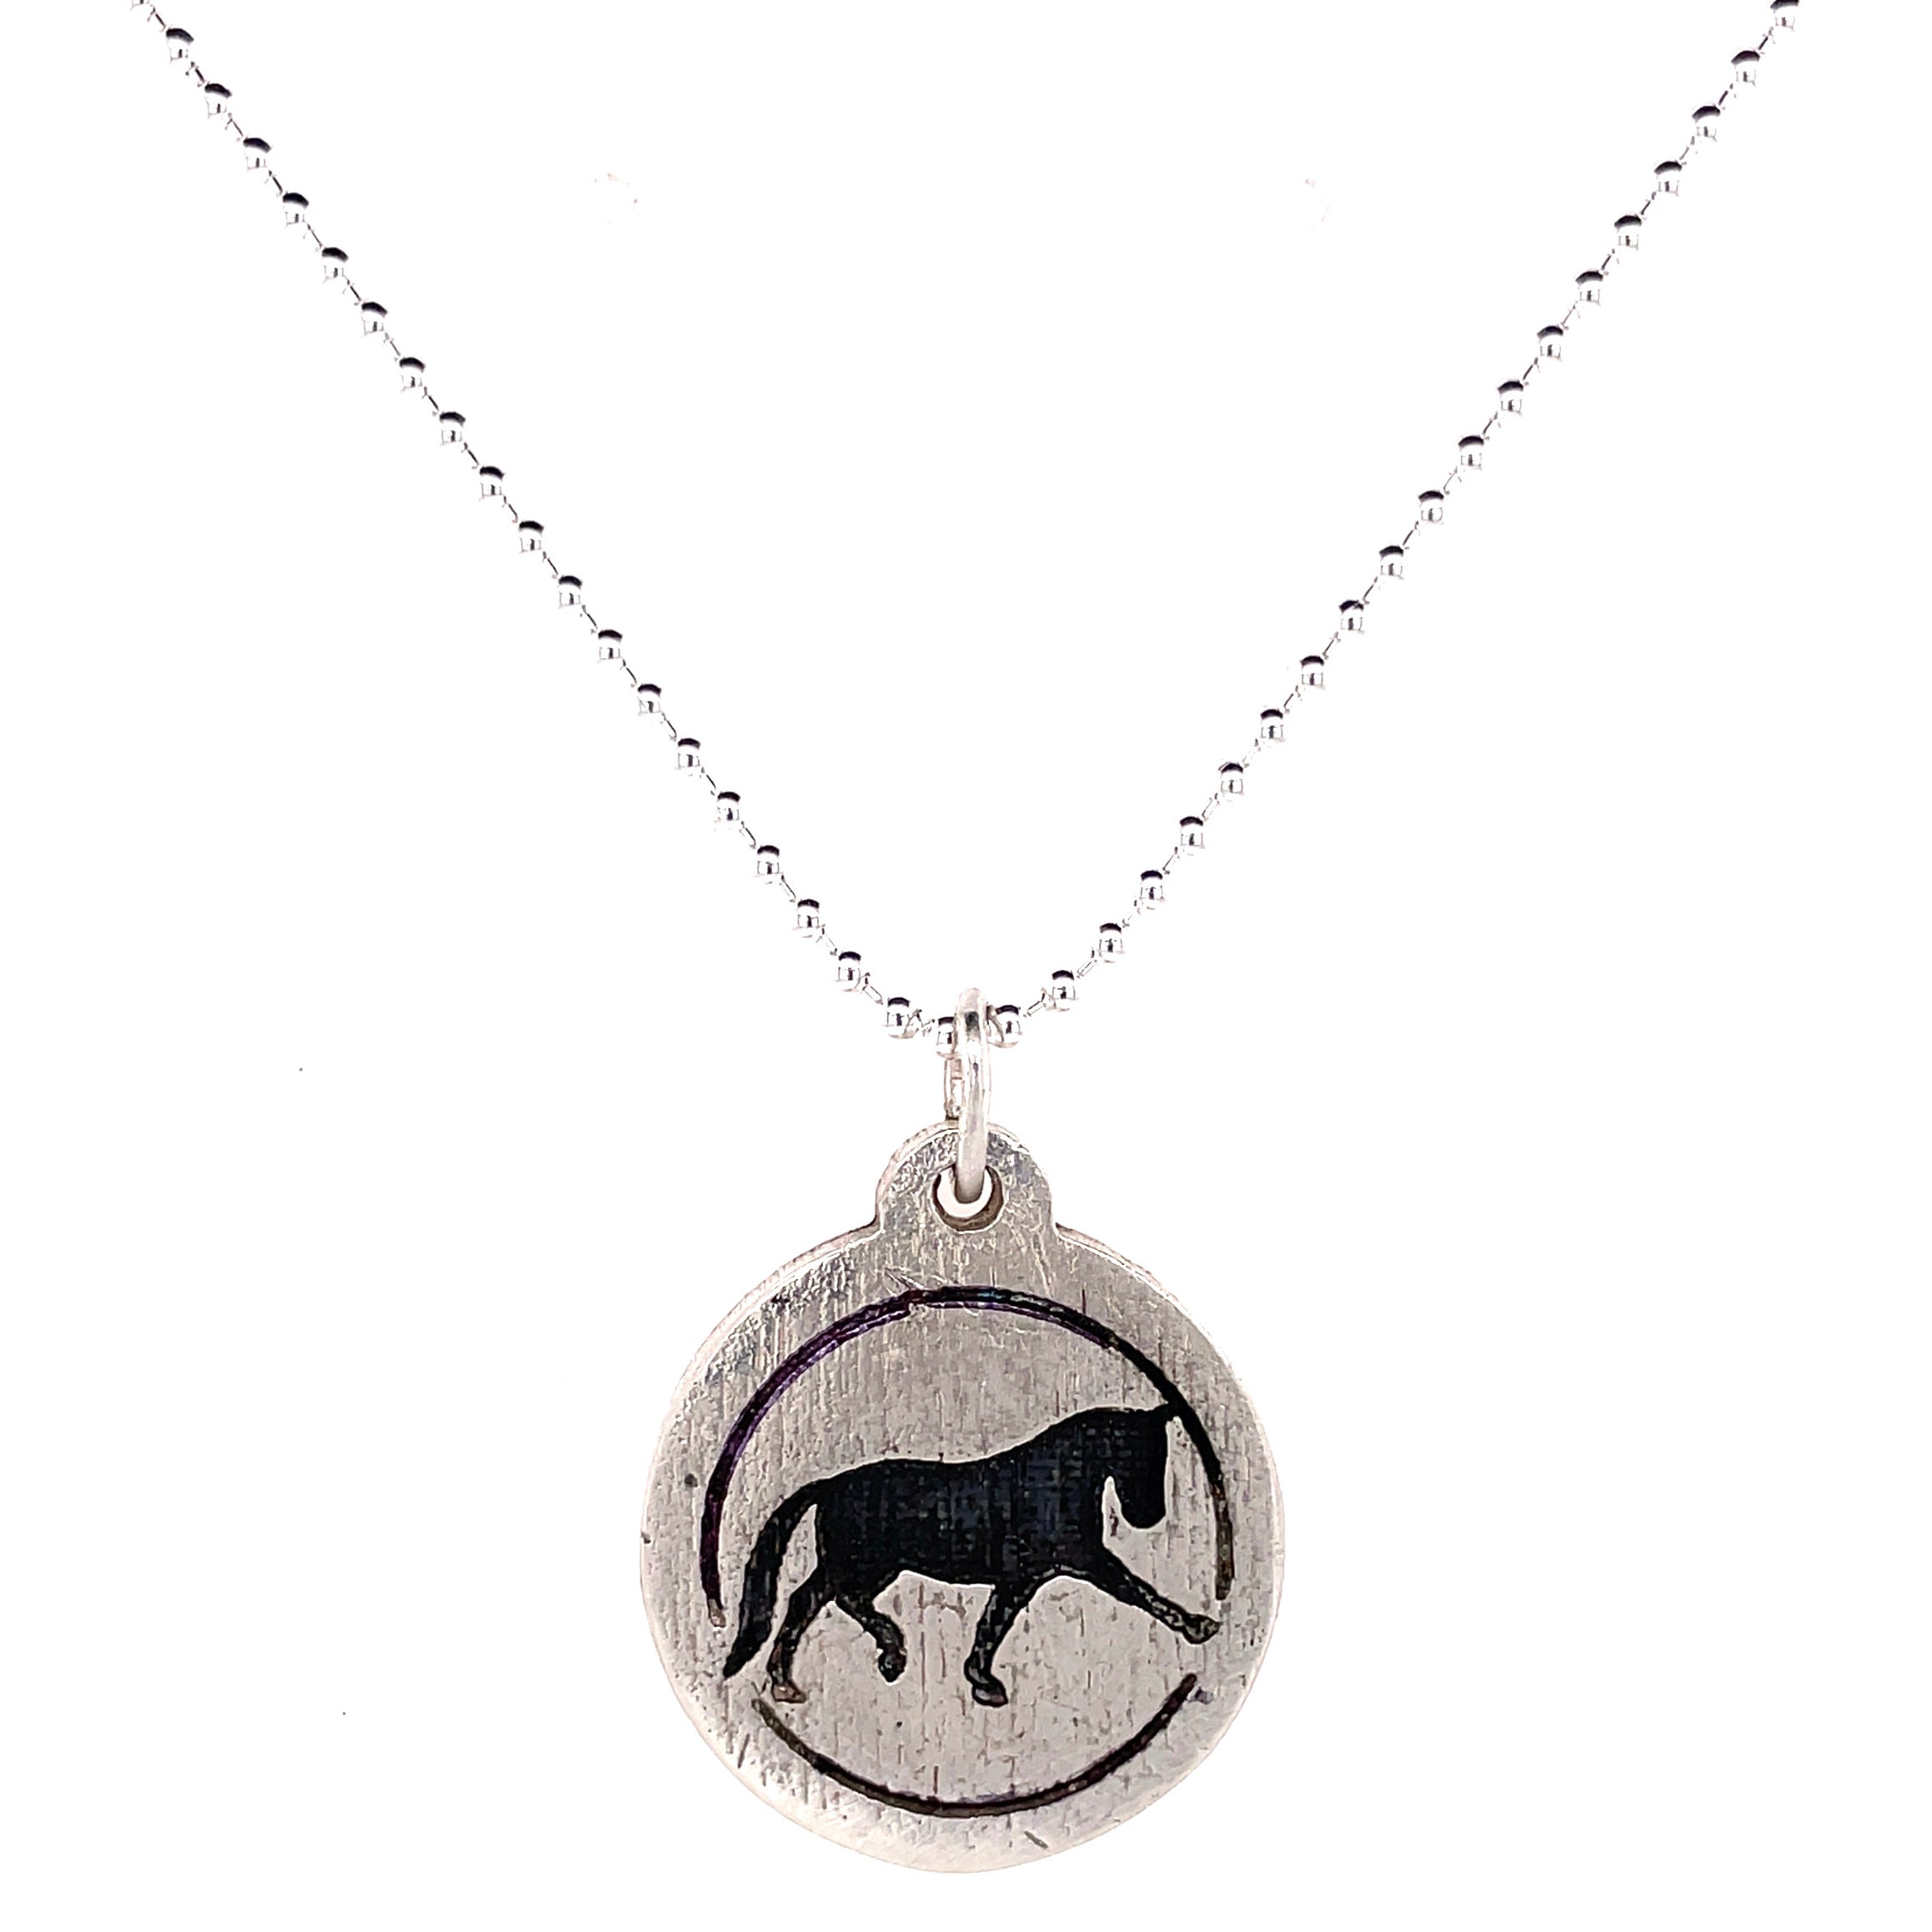 Equestrian silver horse necklace